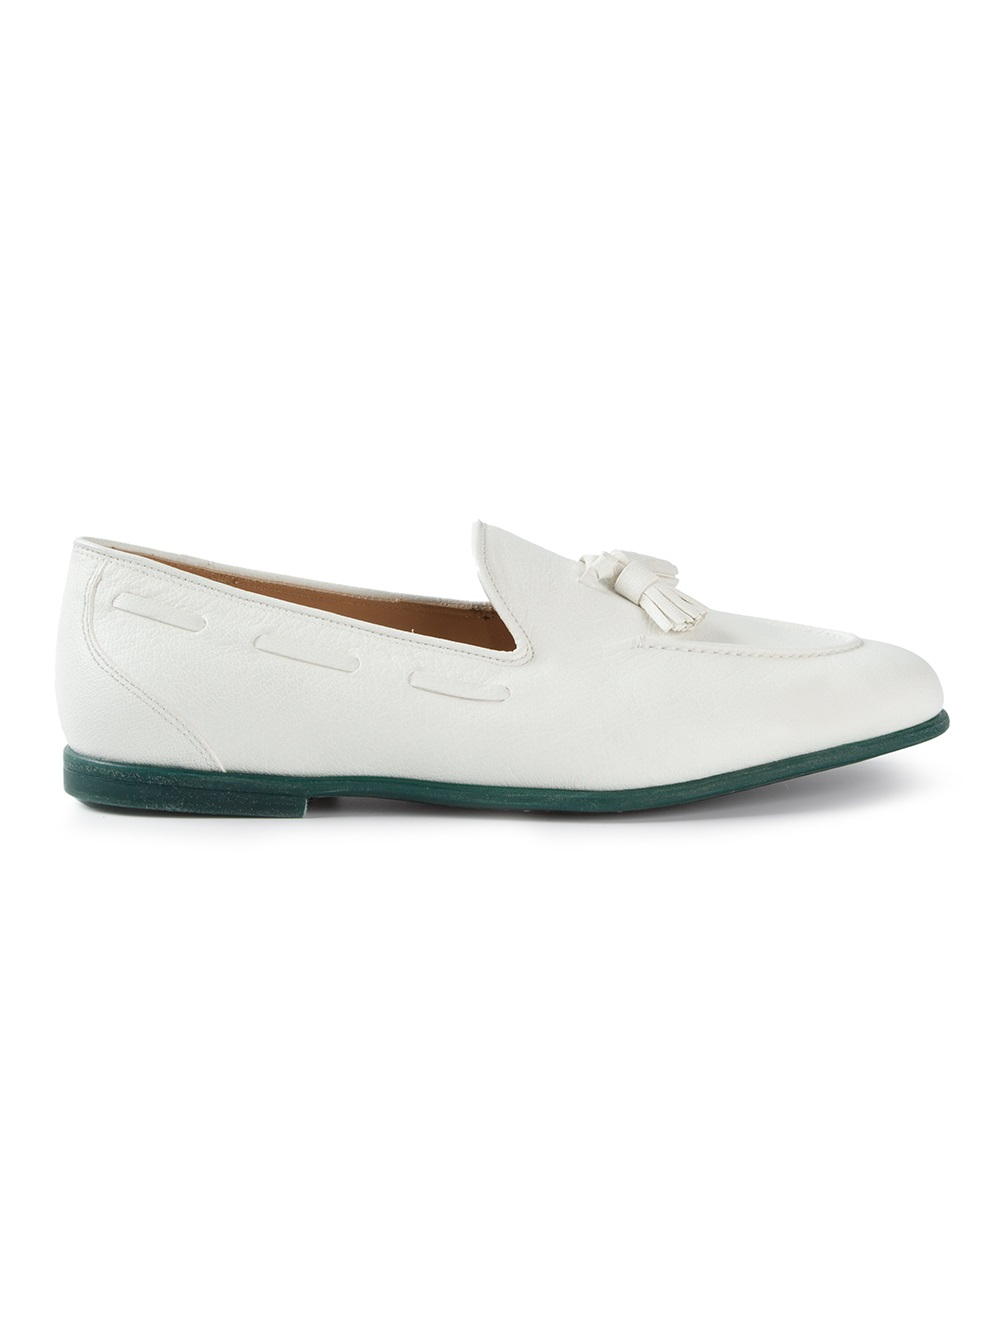 Ferragamo Tassel Loafers in White for Men - Lyst